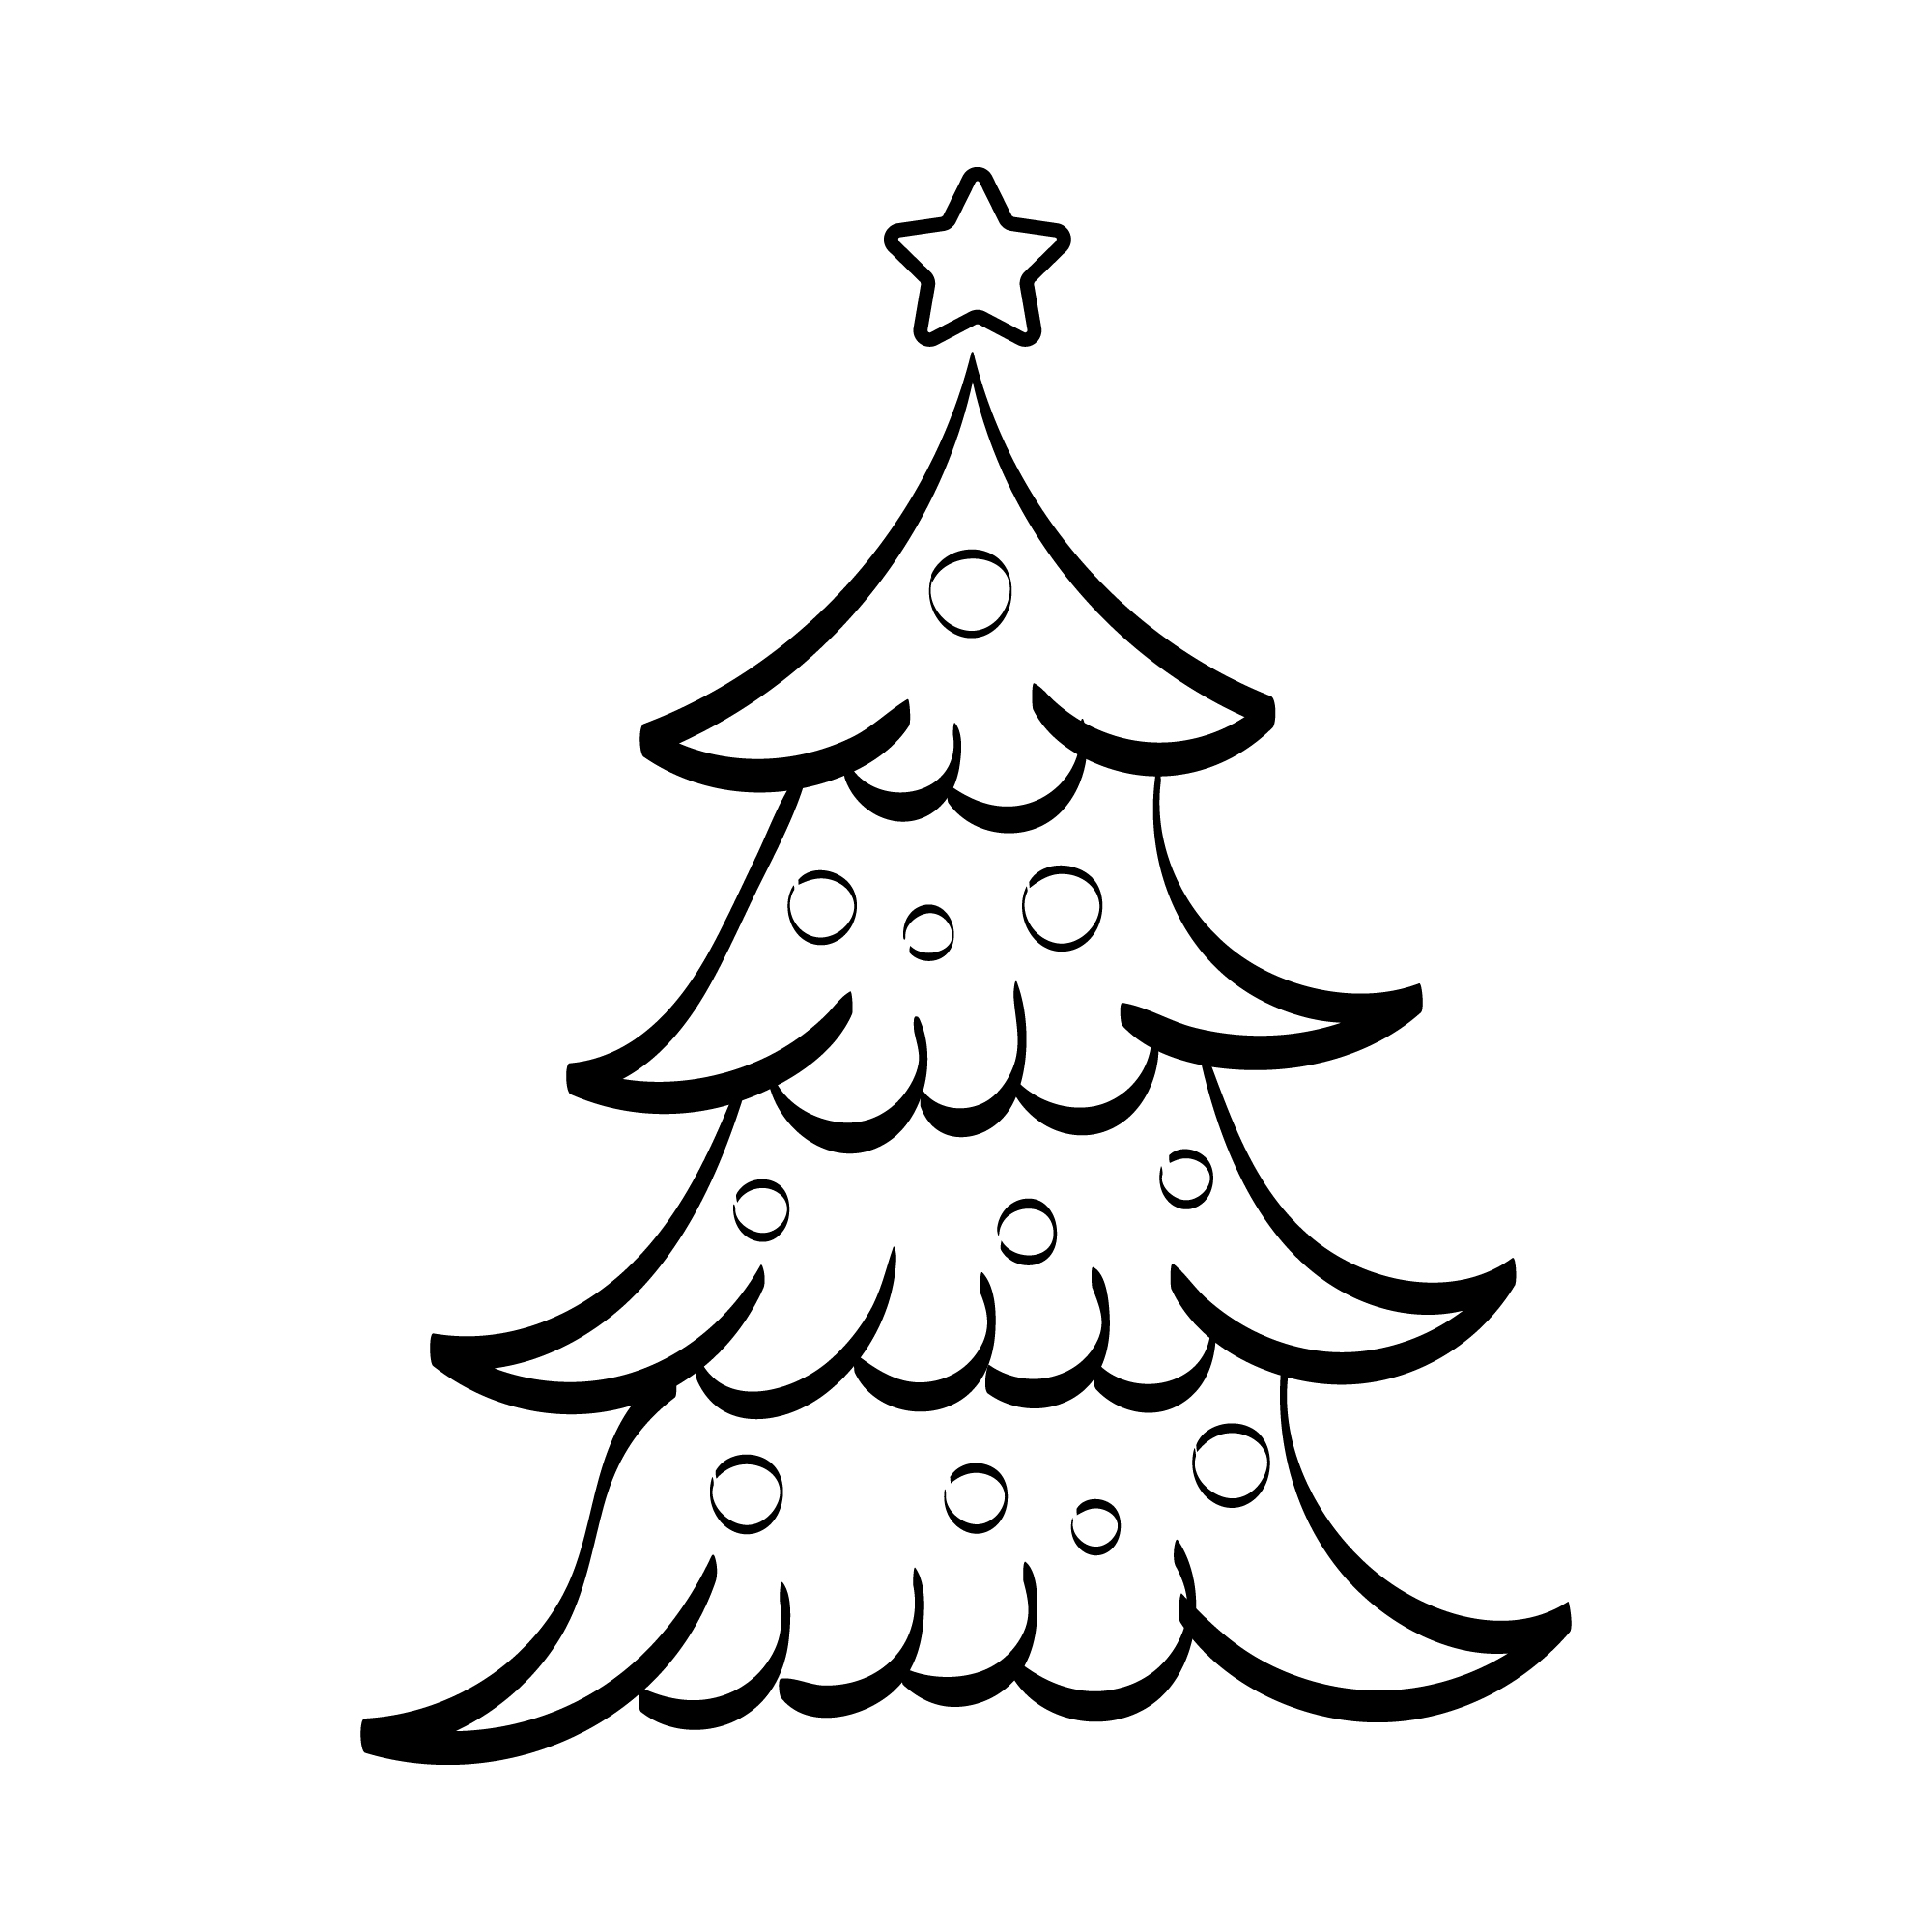 Gorgeous hand drawn image of Christmas tree.